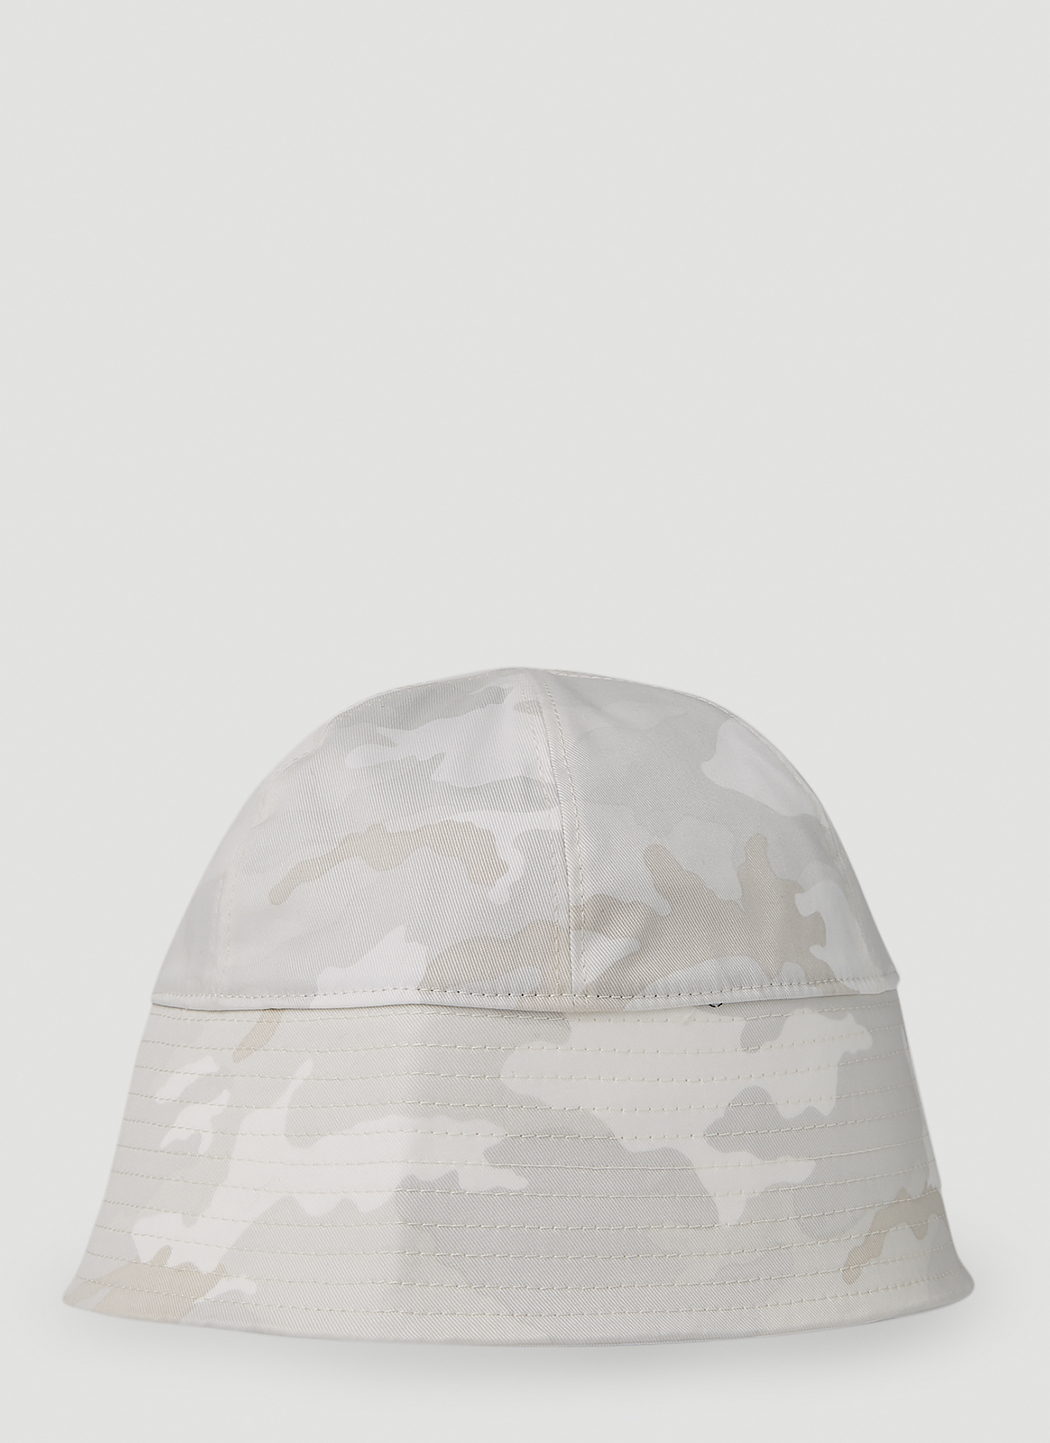 Camouflage Bucket Hat